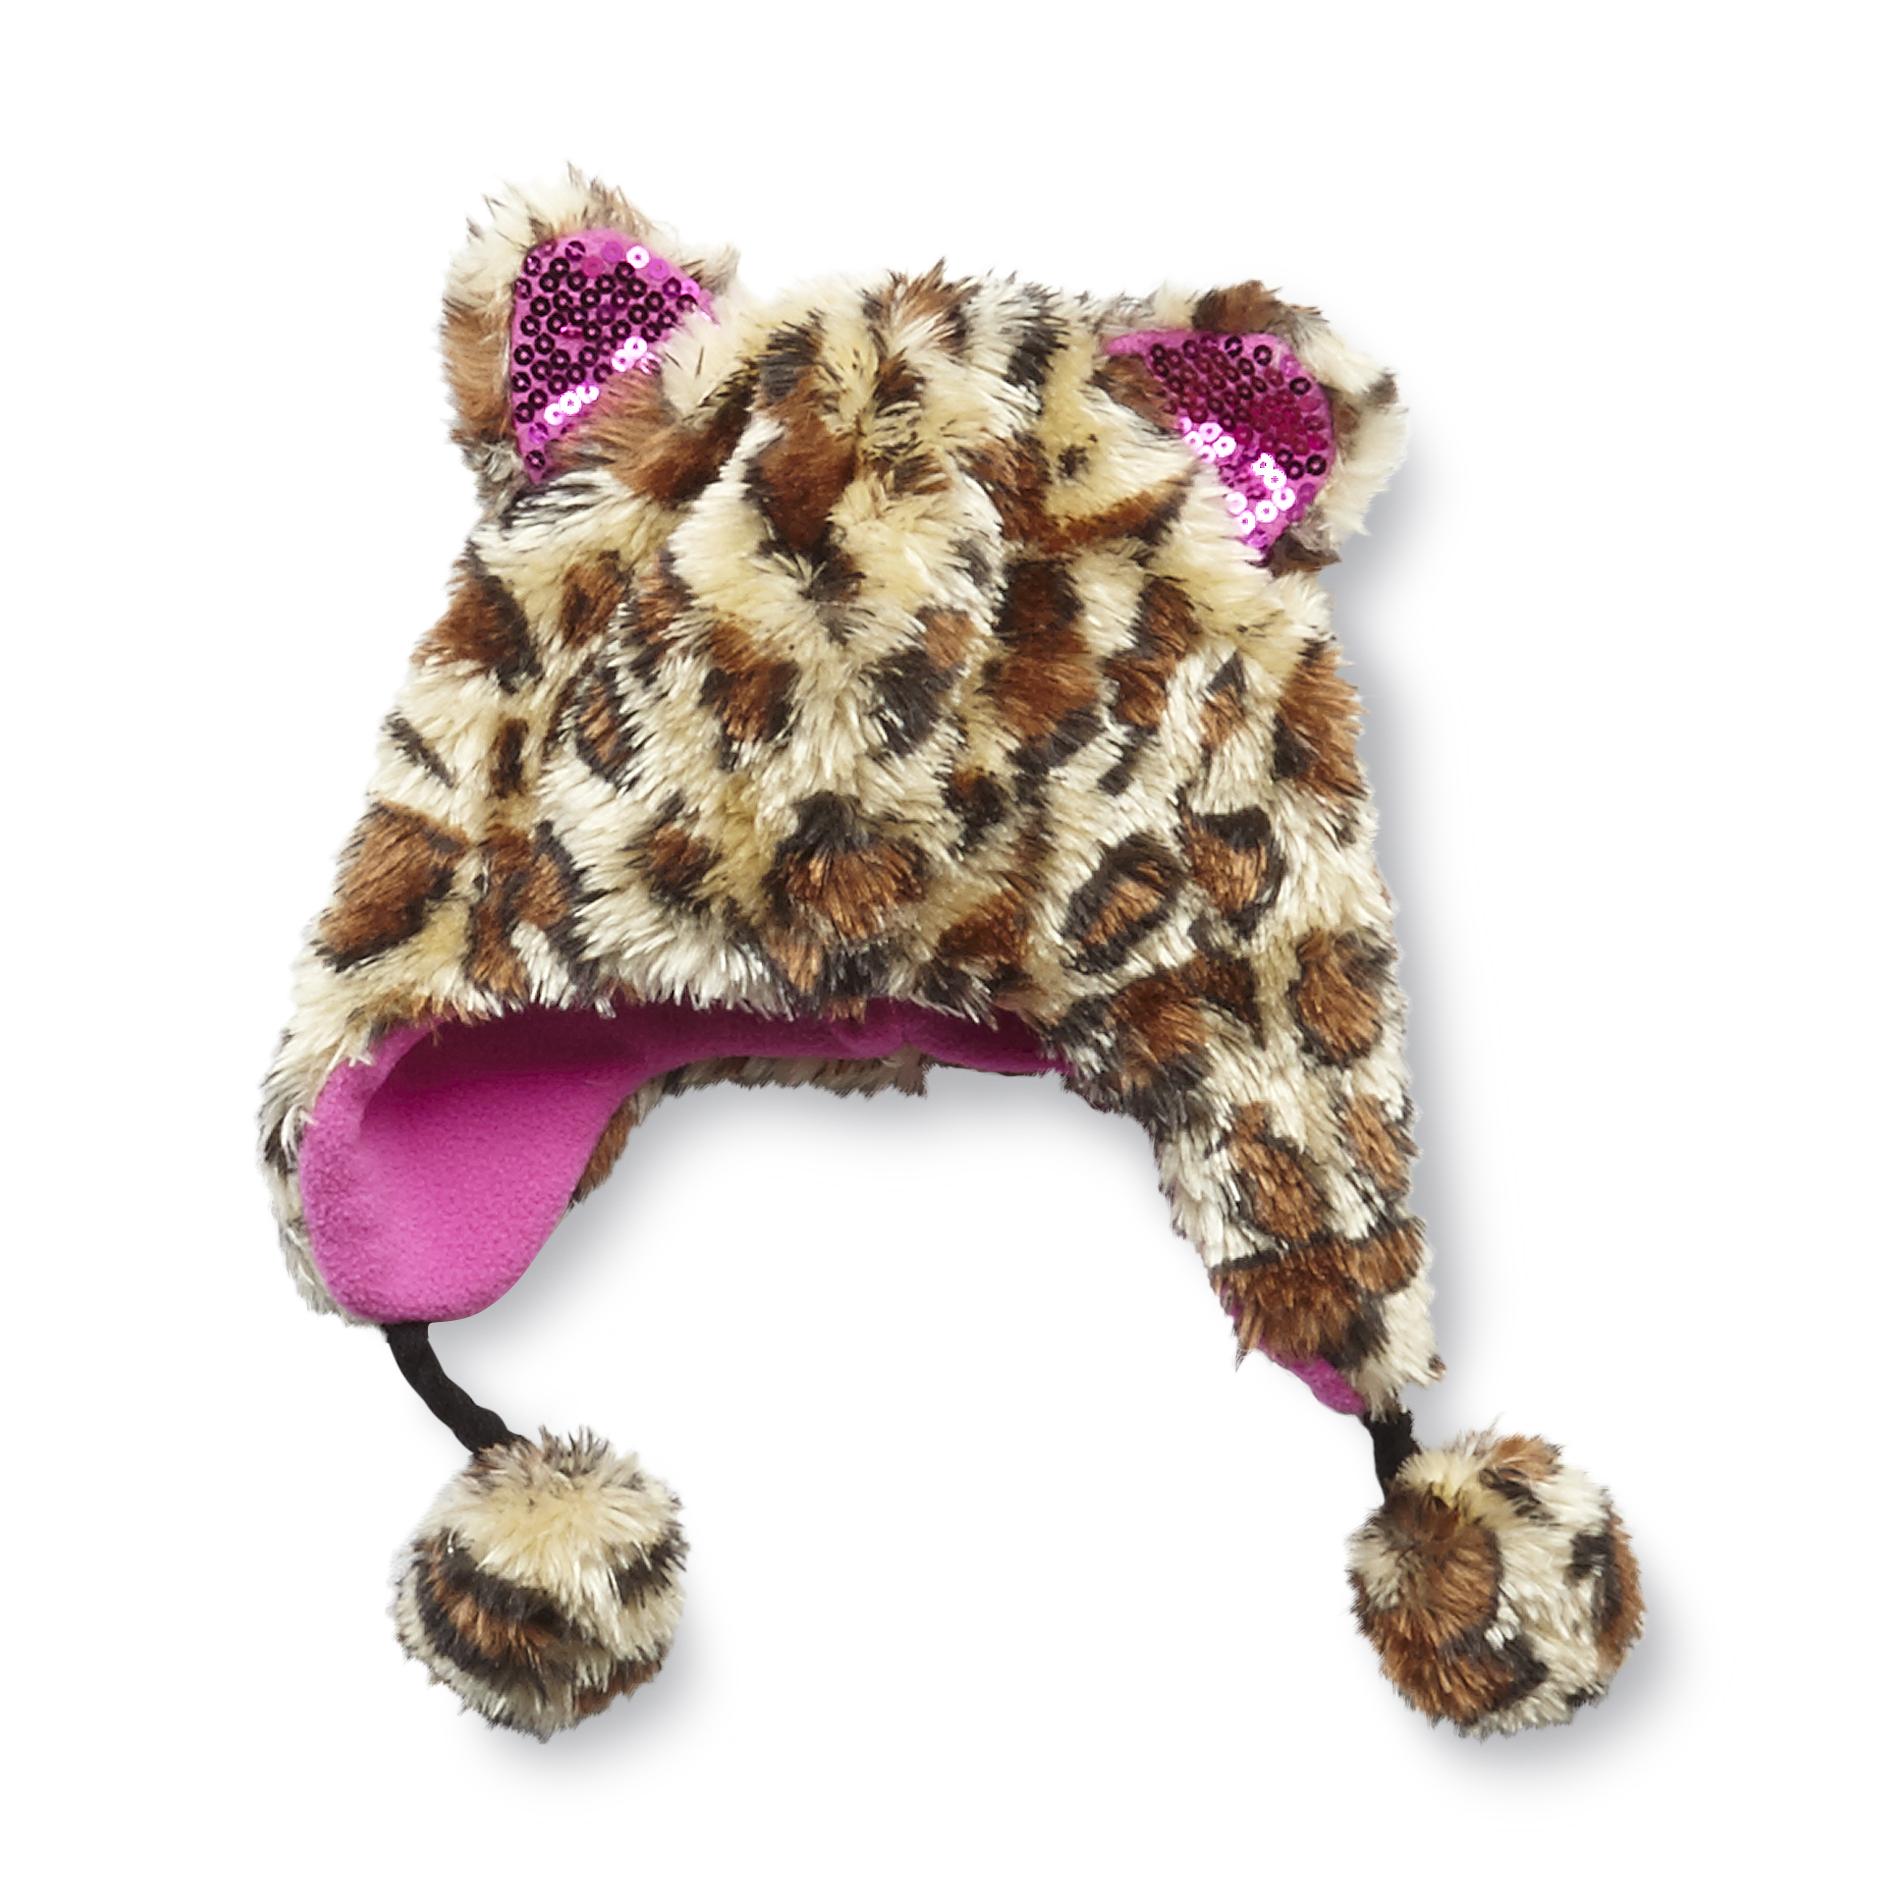 Athletech Girl's Faux Fur Winter Hat - Cheetah Print